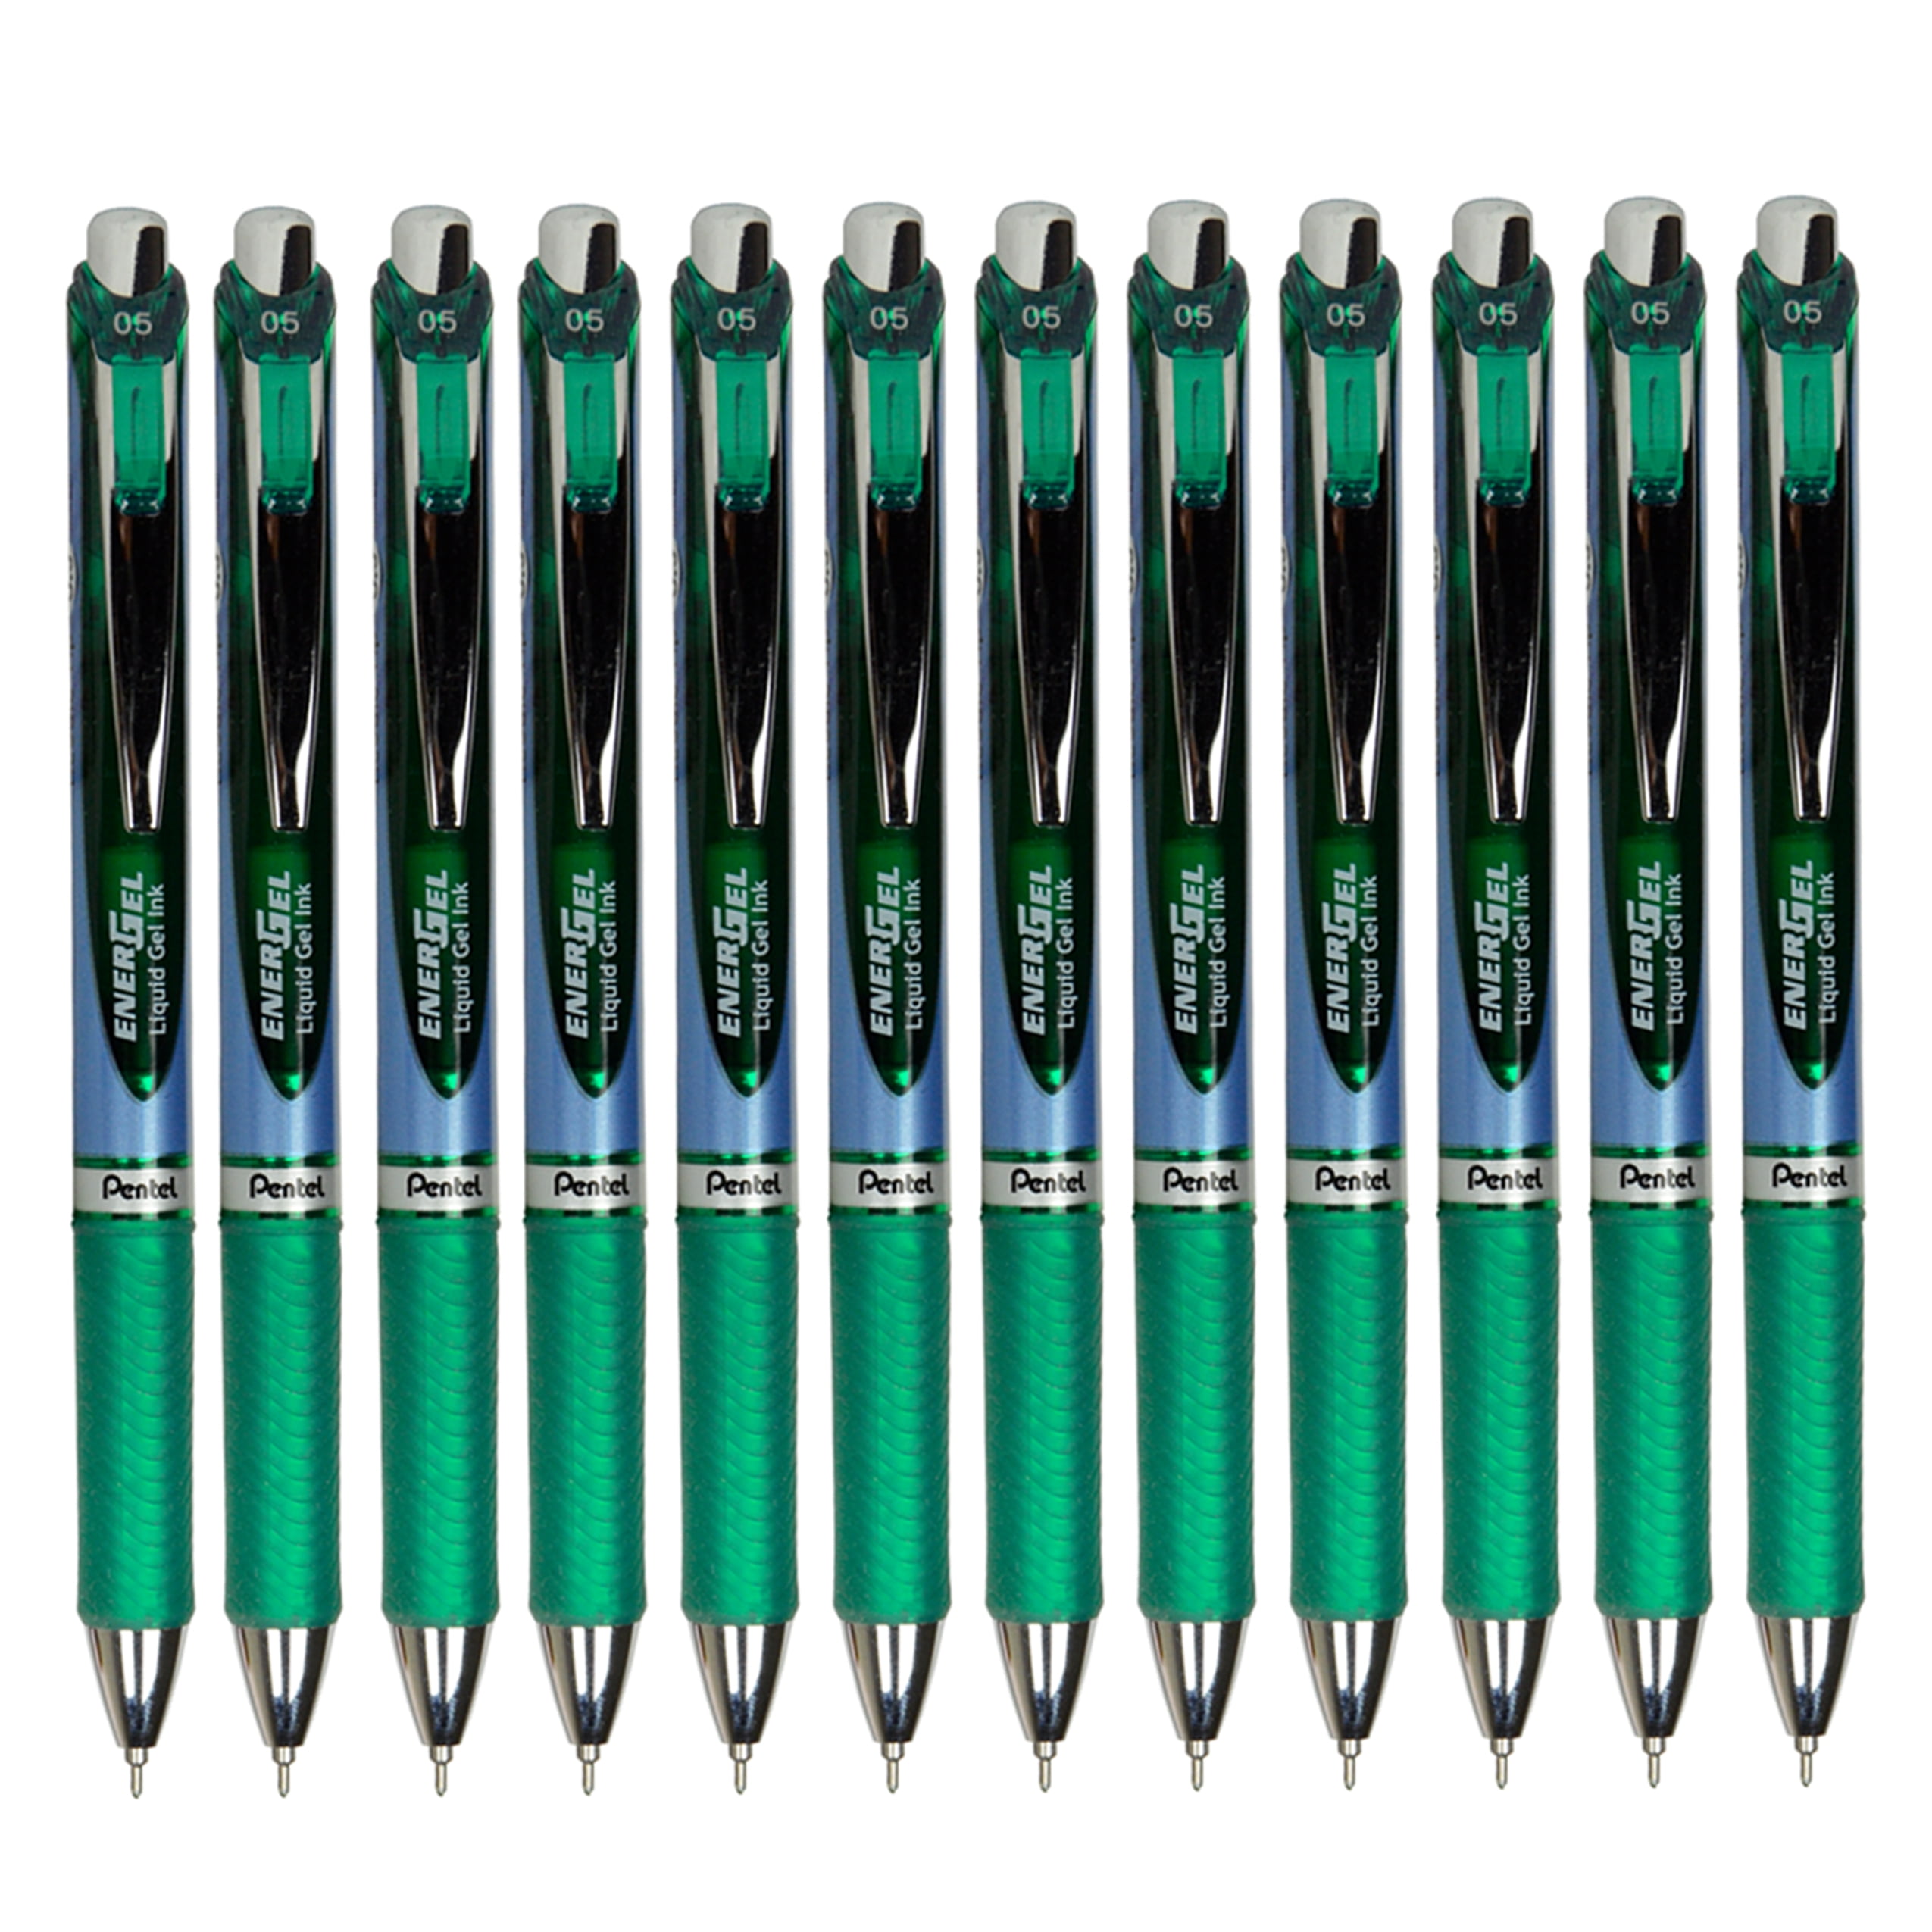 Pentel LRN5 EnerGel Gel Pen Ink Refills Needle Tip 6 Packs 0.5mm Fine Point 